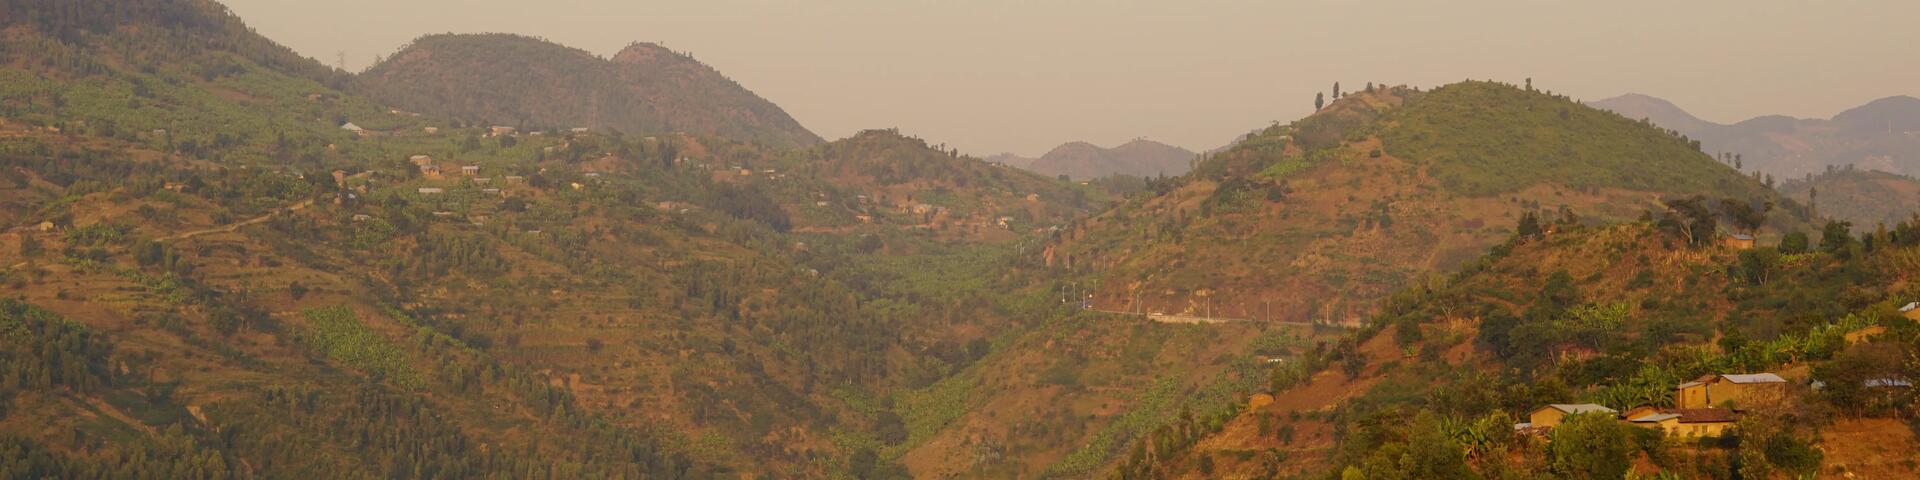 tb-rwanda-heuvels-zonsondergang